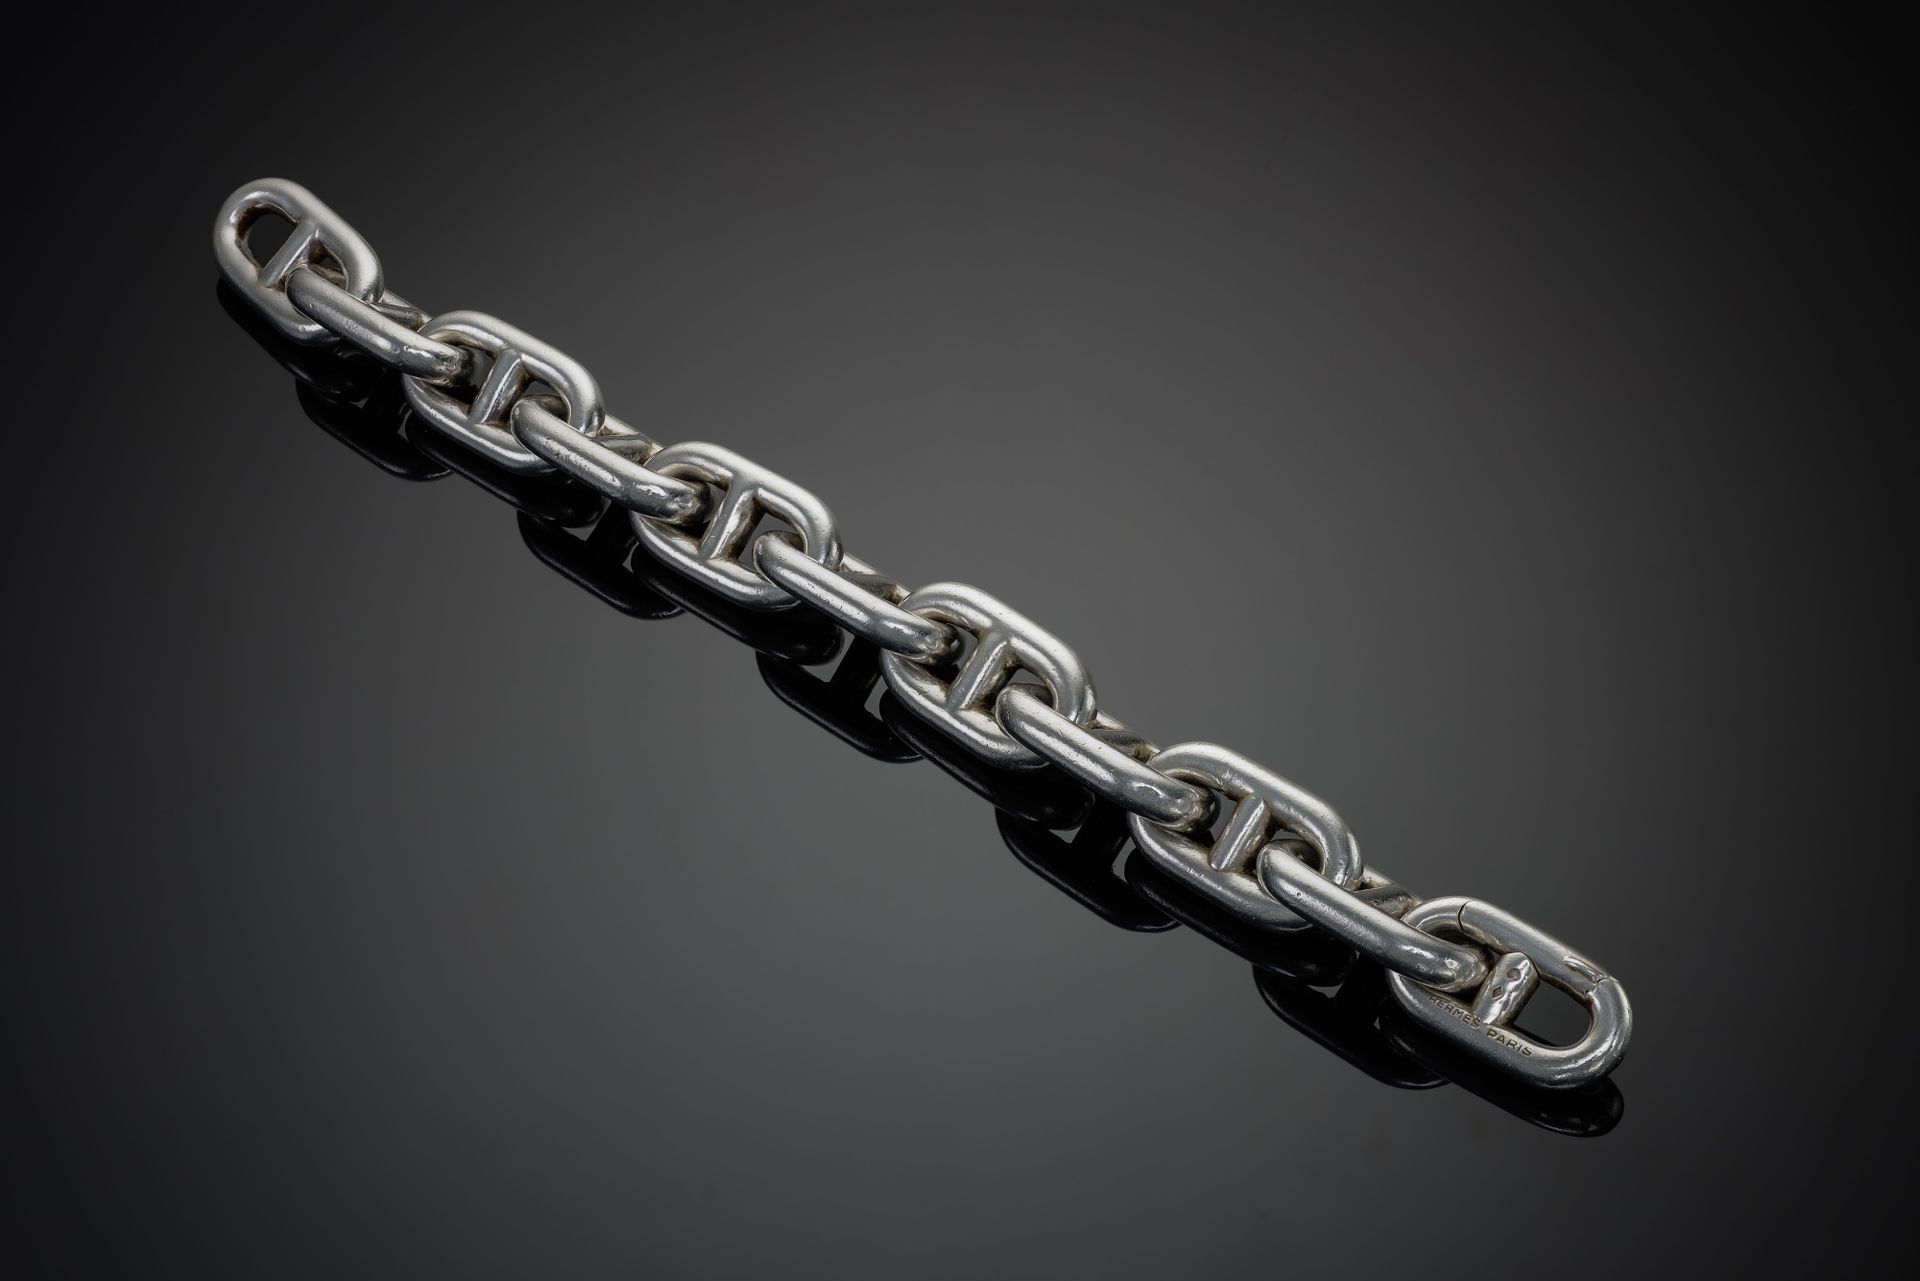 Null 巴黎爱马仕
银色 "锚链 "手链 
长度： 21 cm
重量：124.3克
约1960年